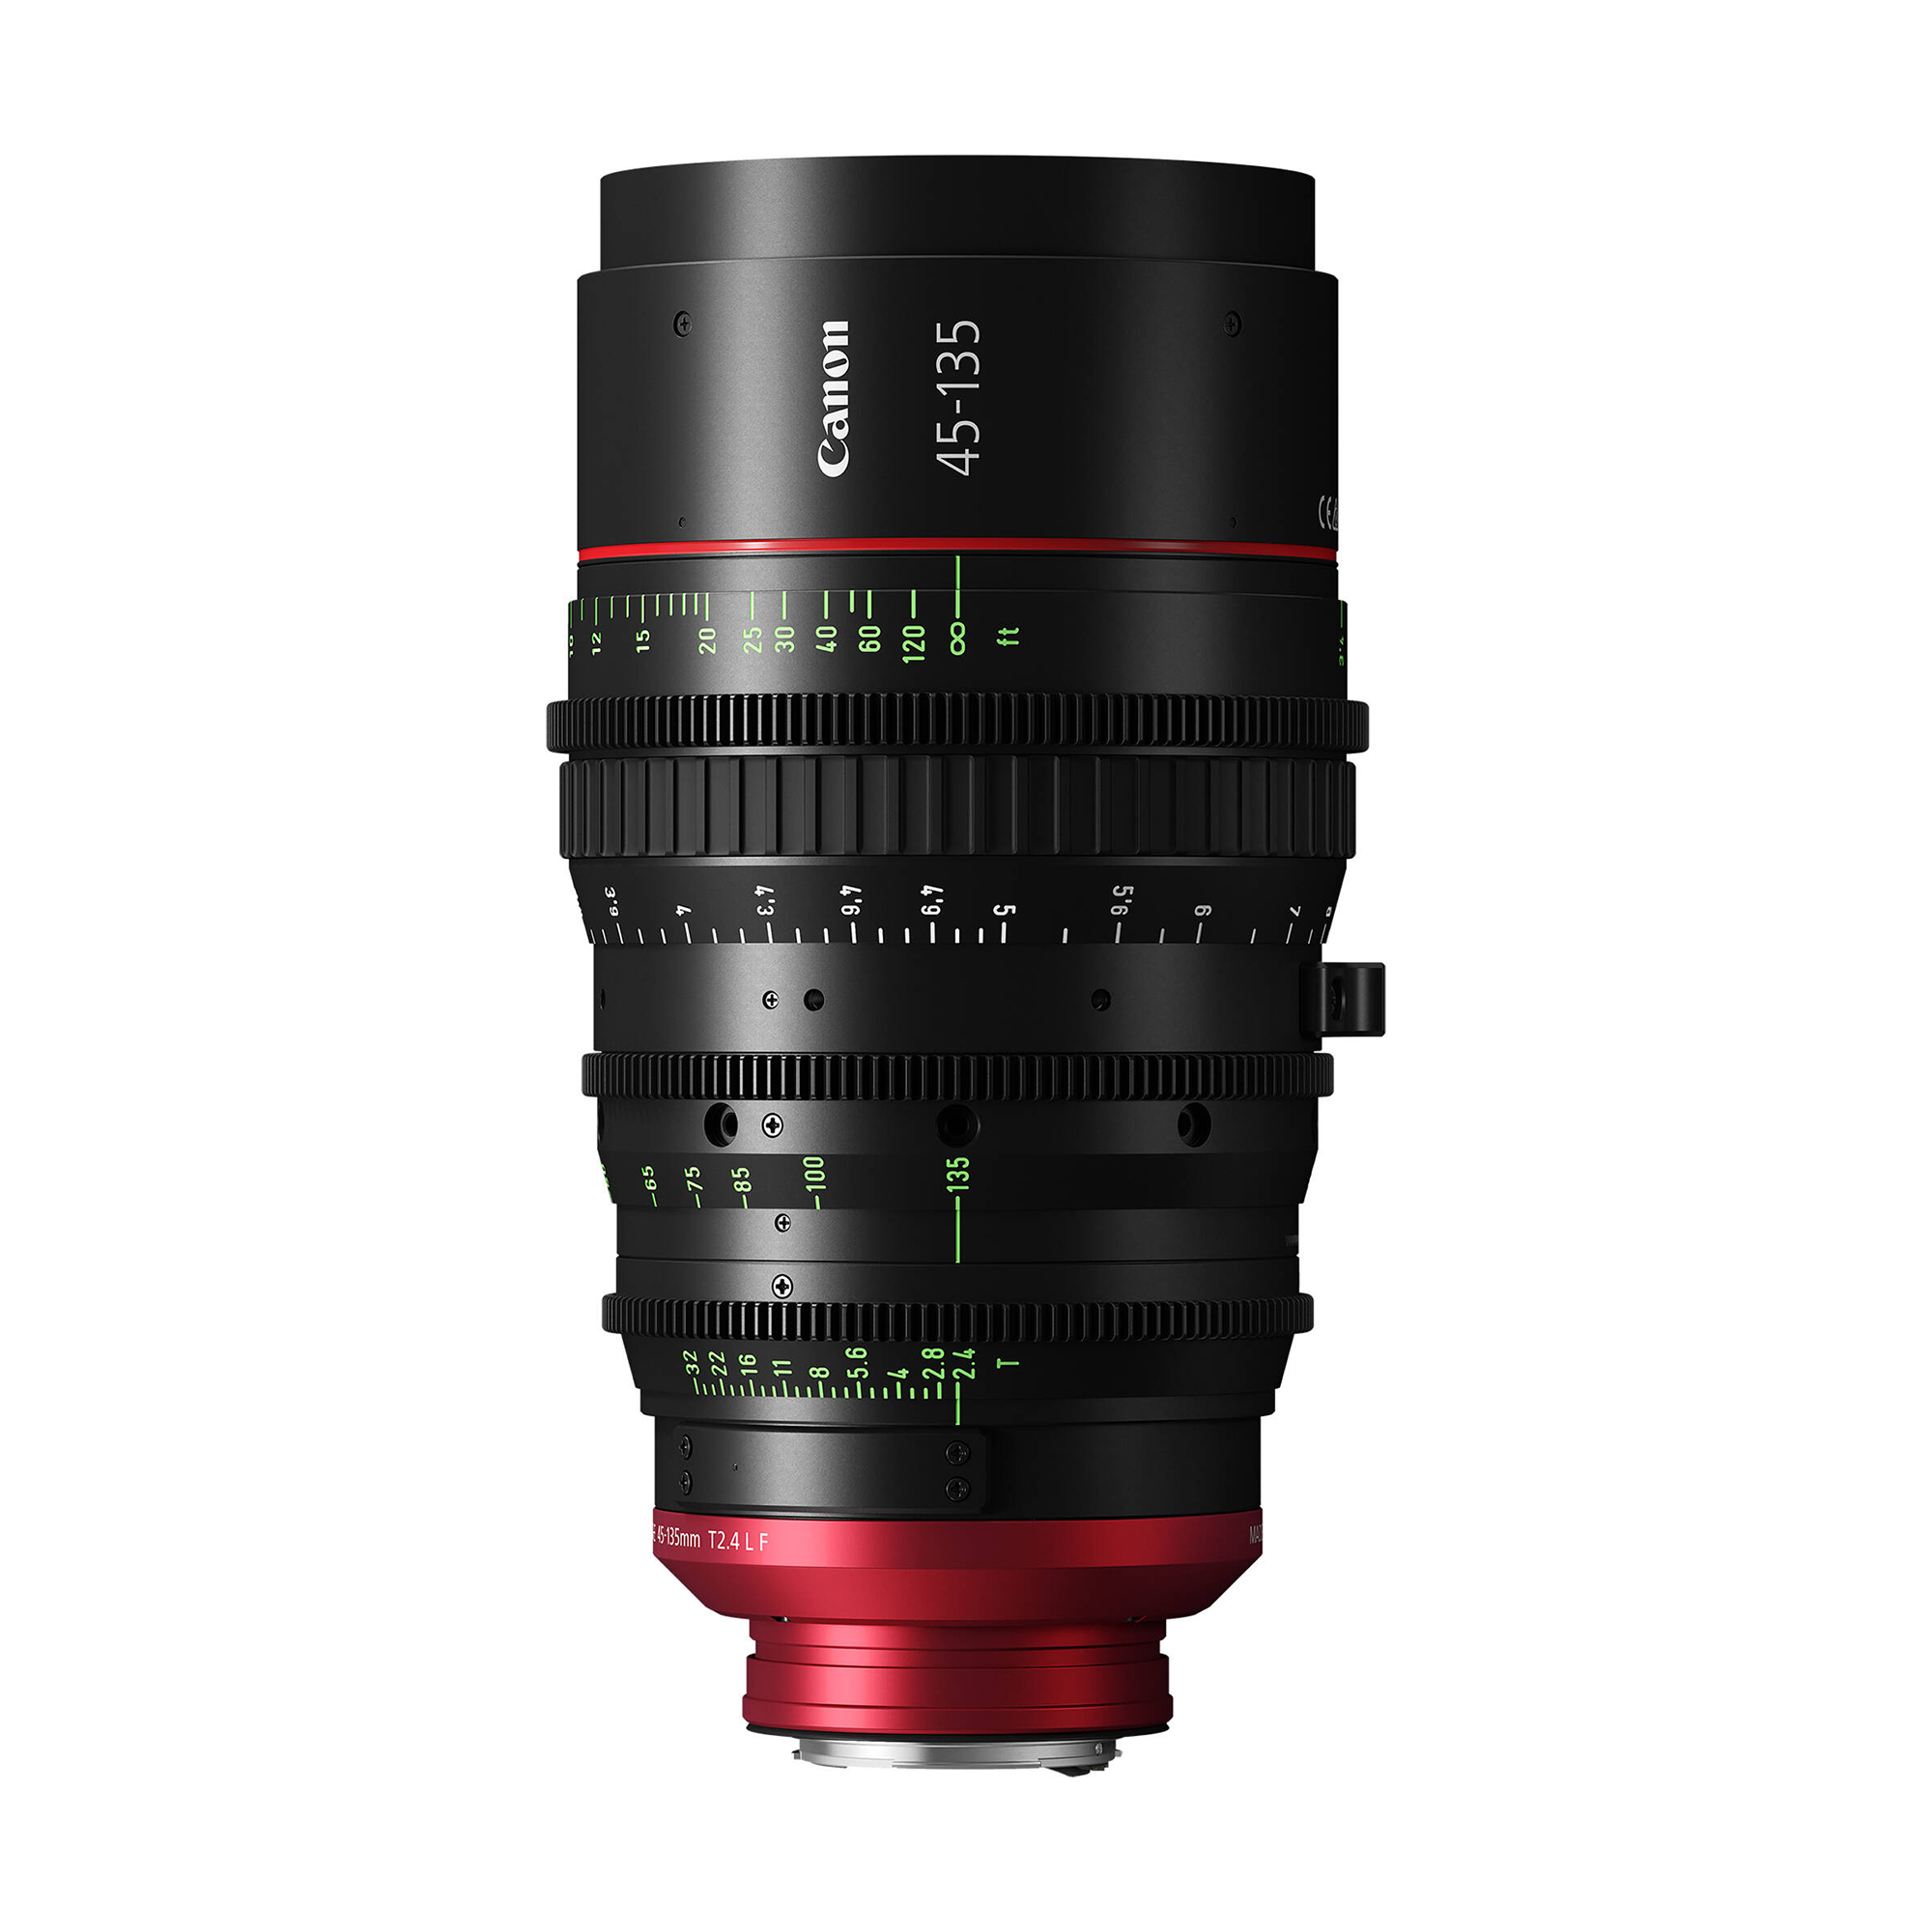 Canon CN-E 45-135mm T2.4 LF Cinema EOS Zoom Lens (EF Mount, Metres)